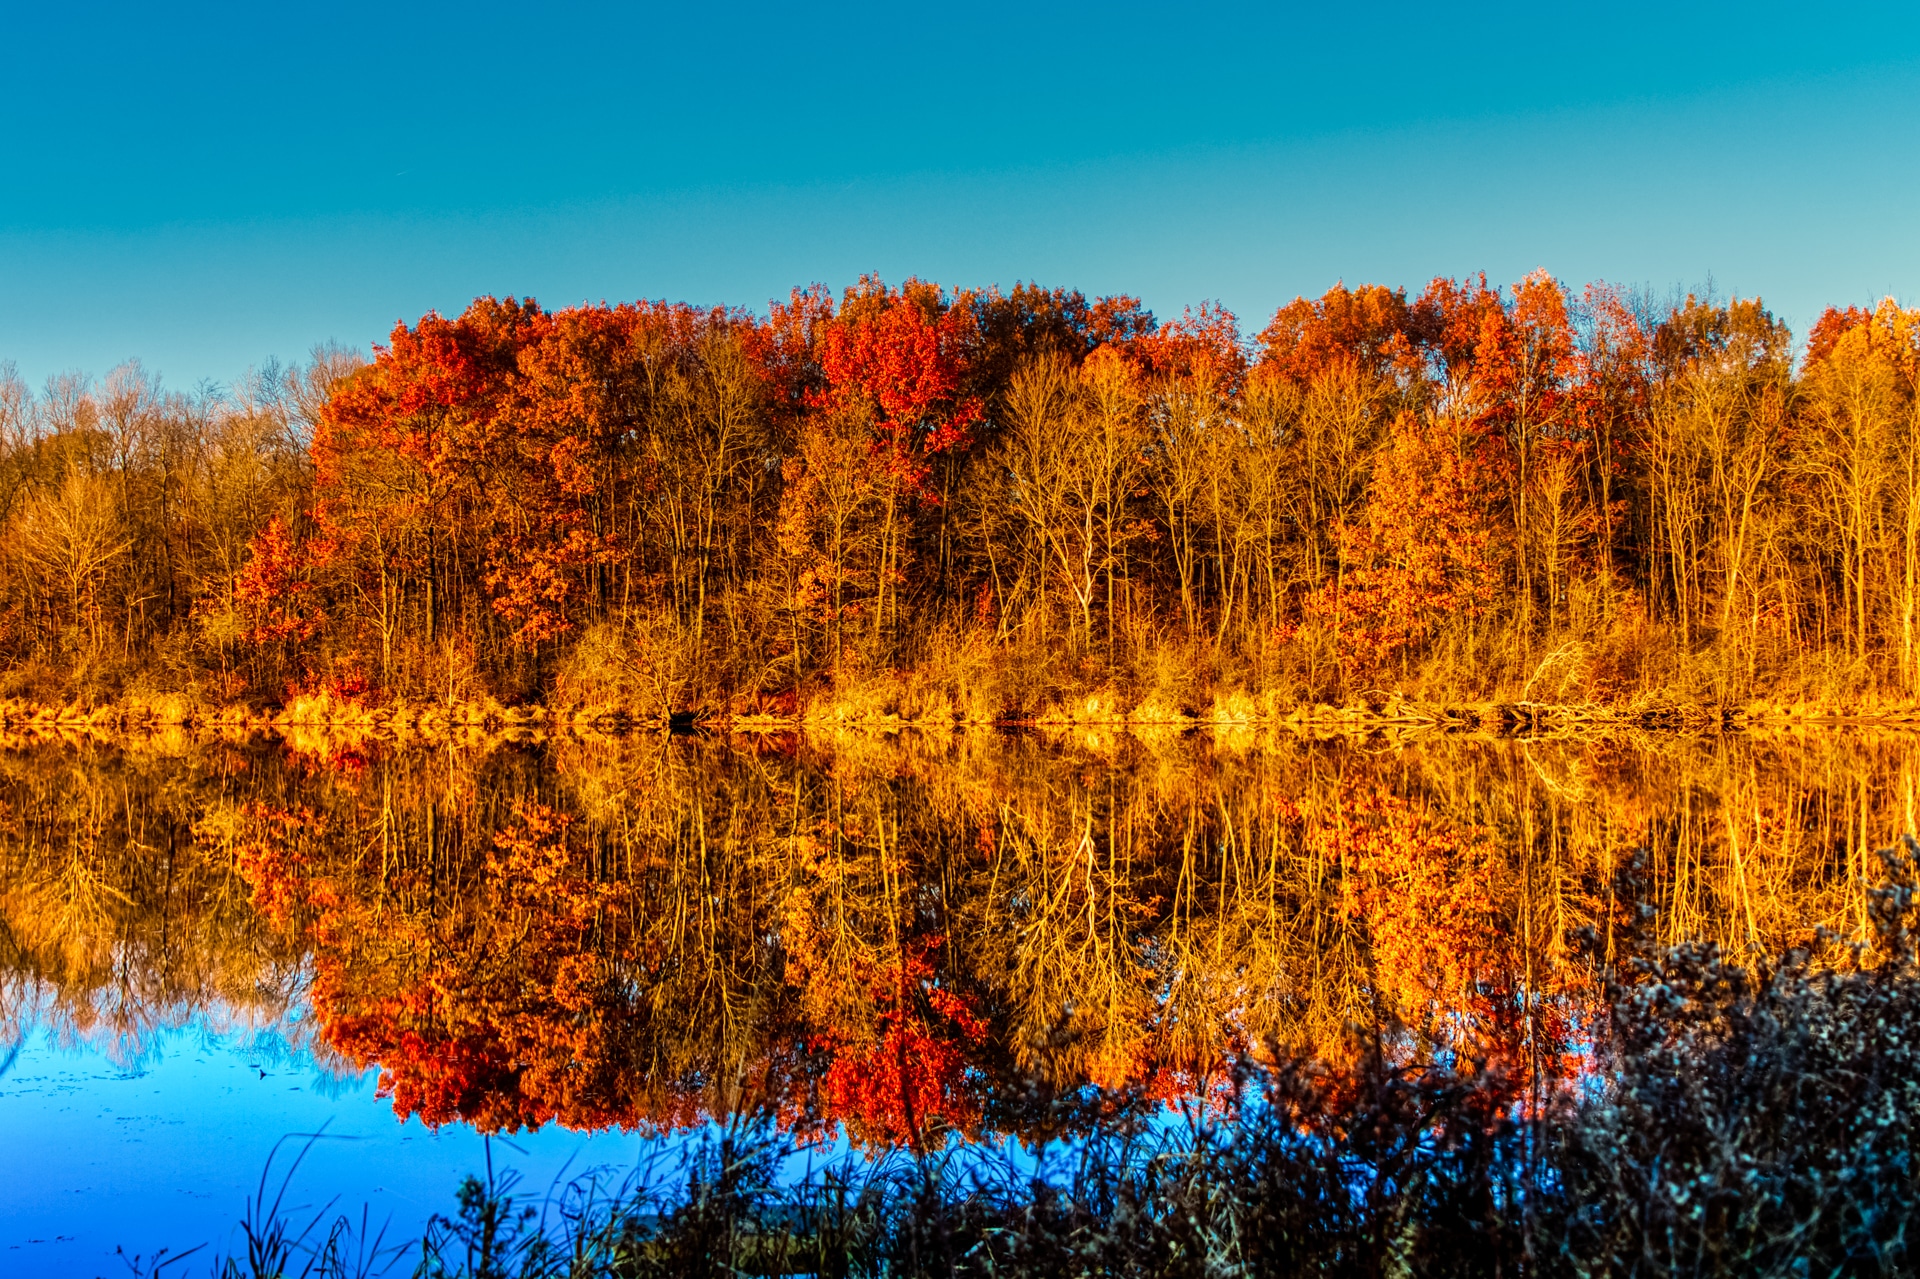 A Reflection of Autumn - Elk Grove Village, IL